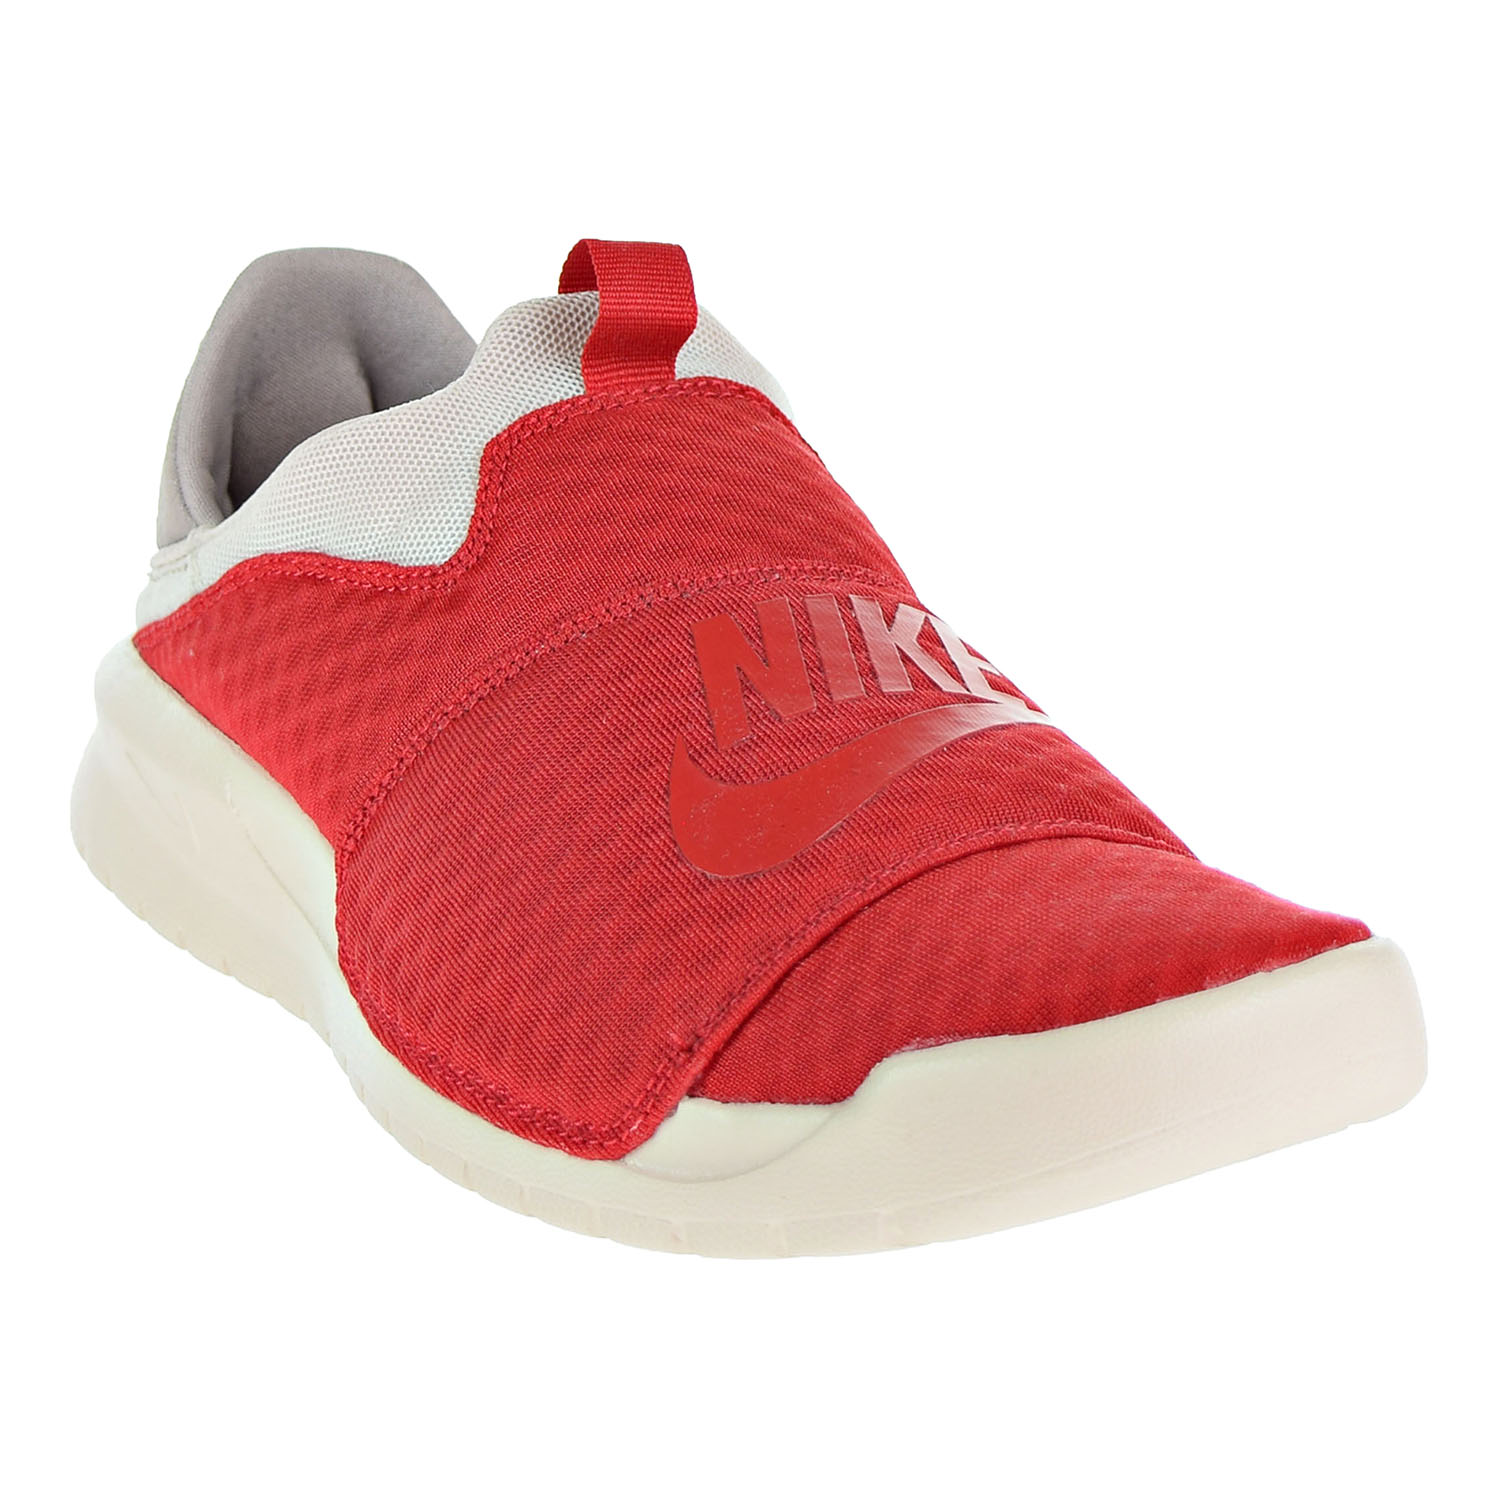 Nike Benassi Slip Men's Shoes University Red/University Red 882410-602 (9.5  D(M) US)